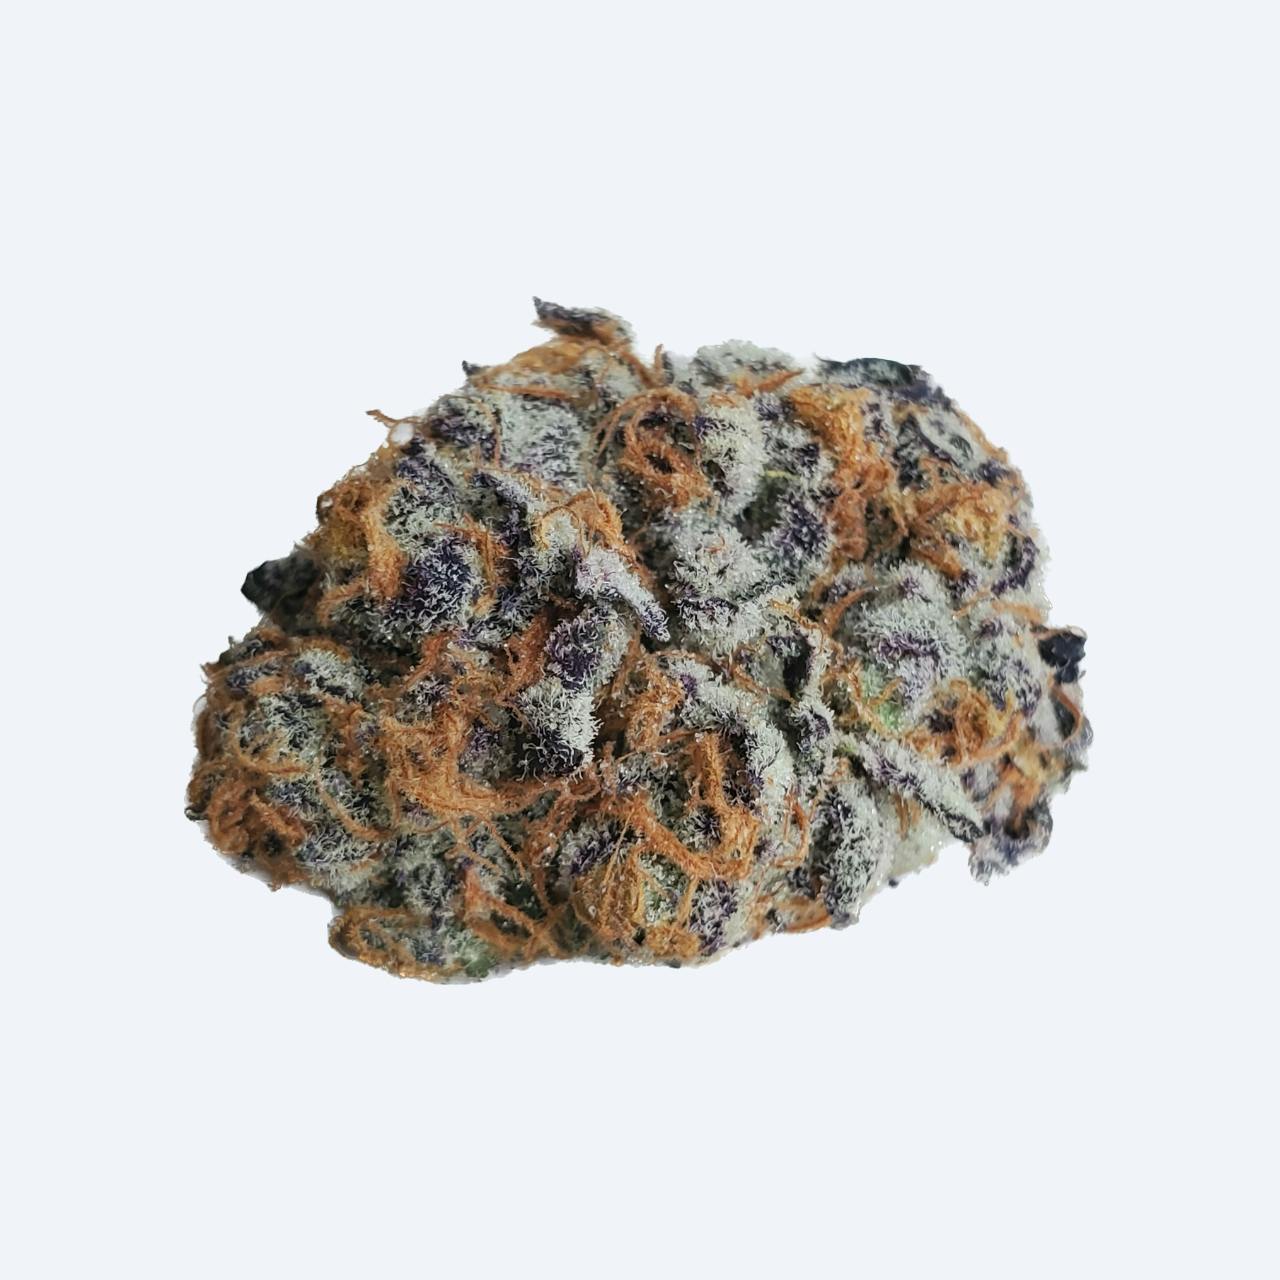 Medical cannabis flower